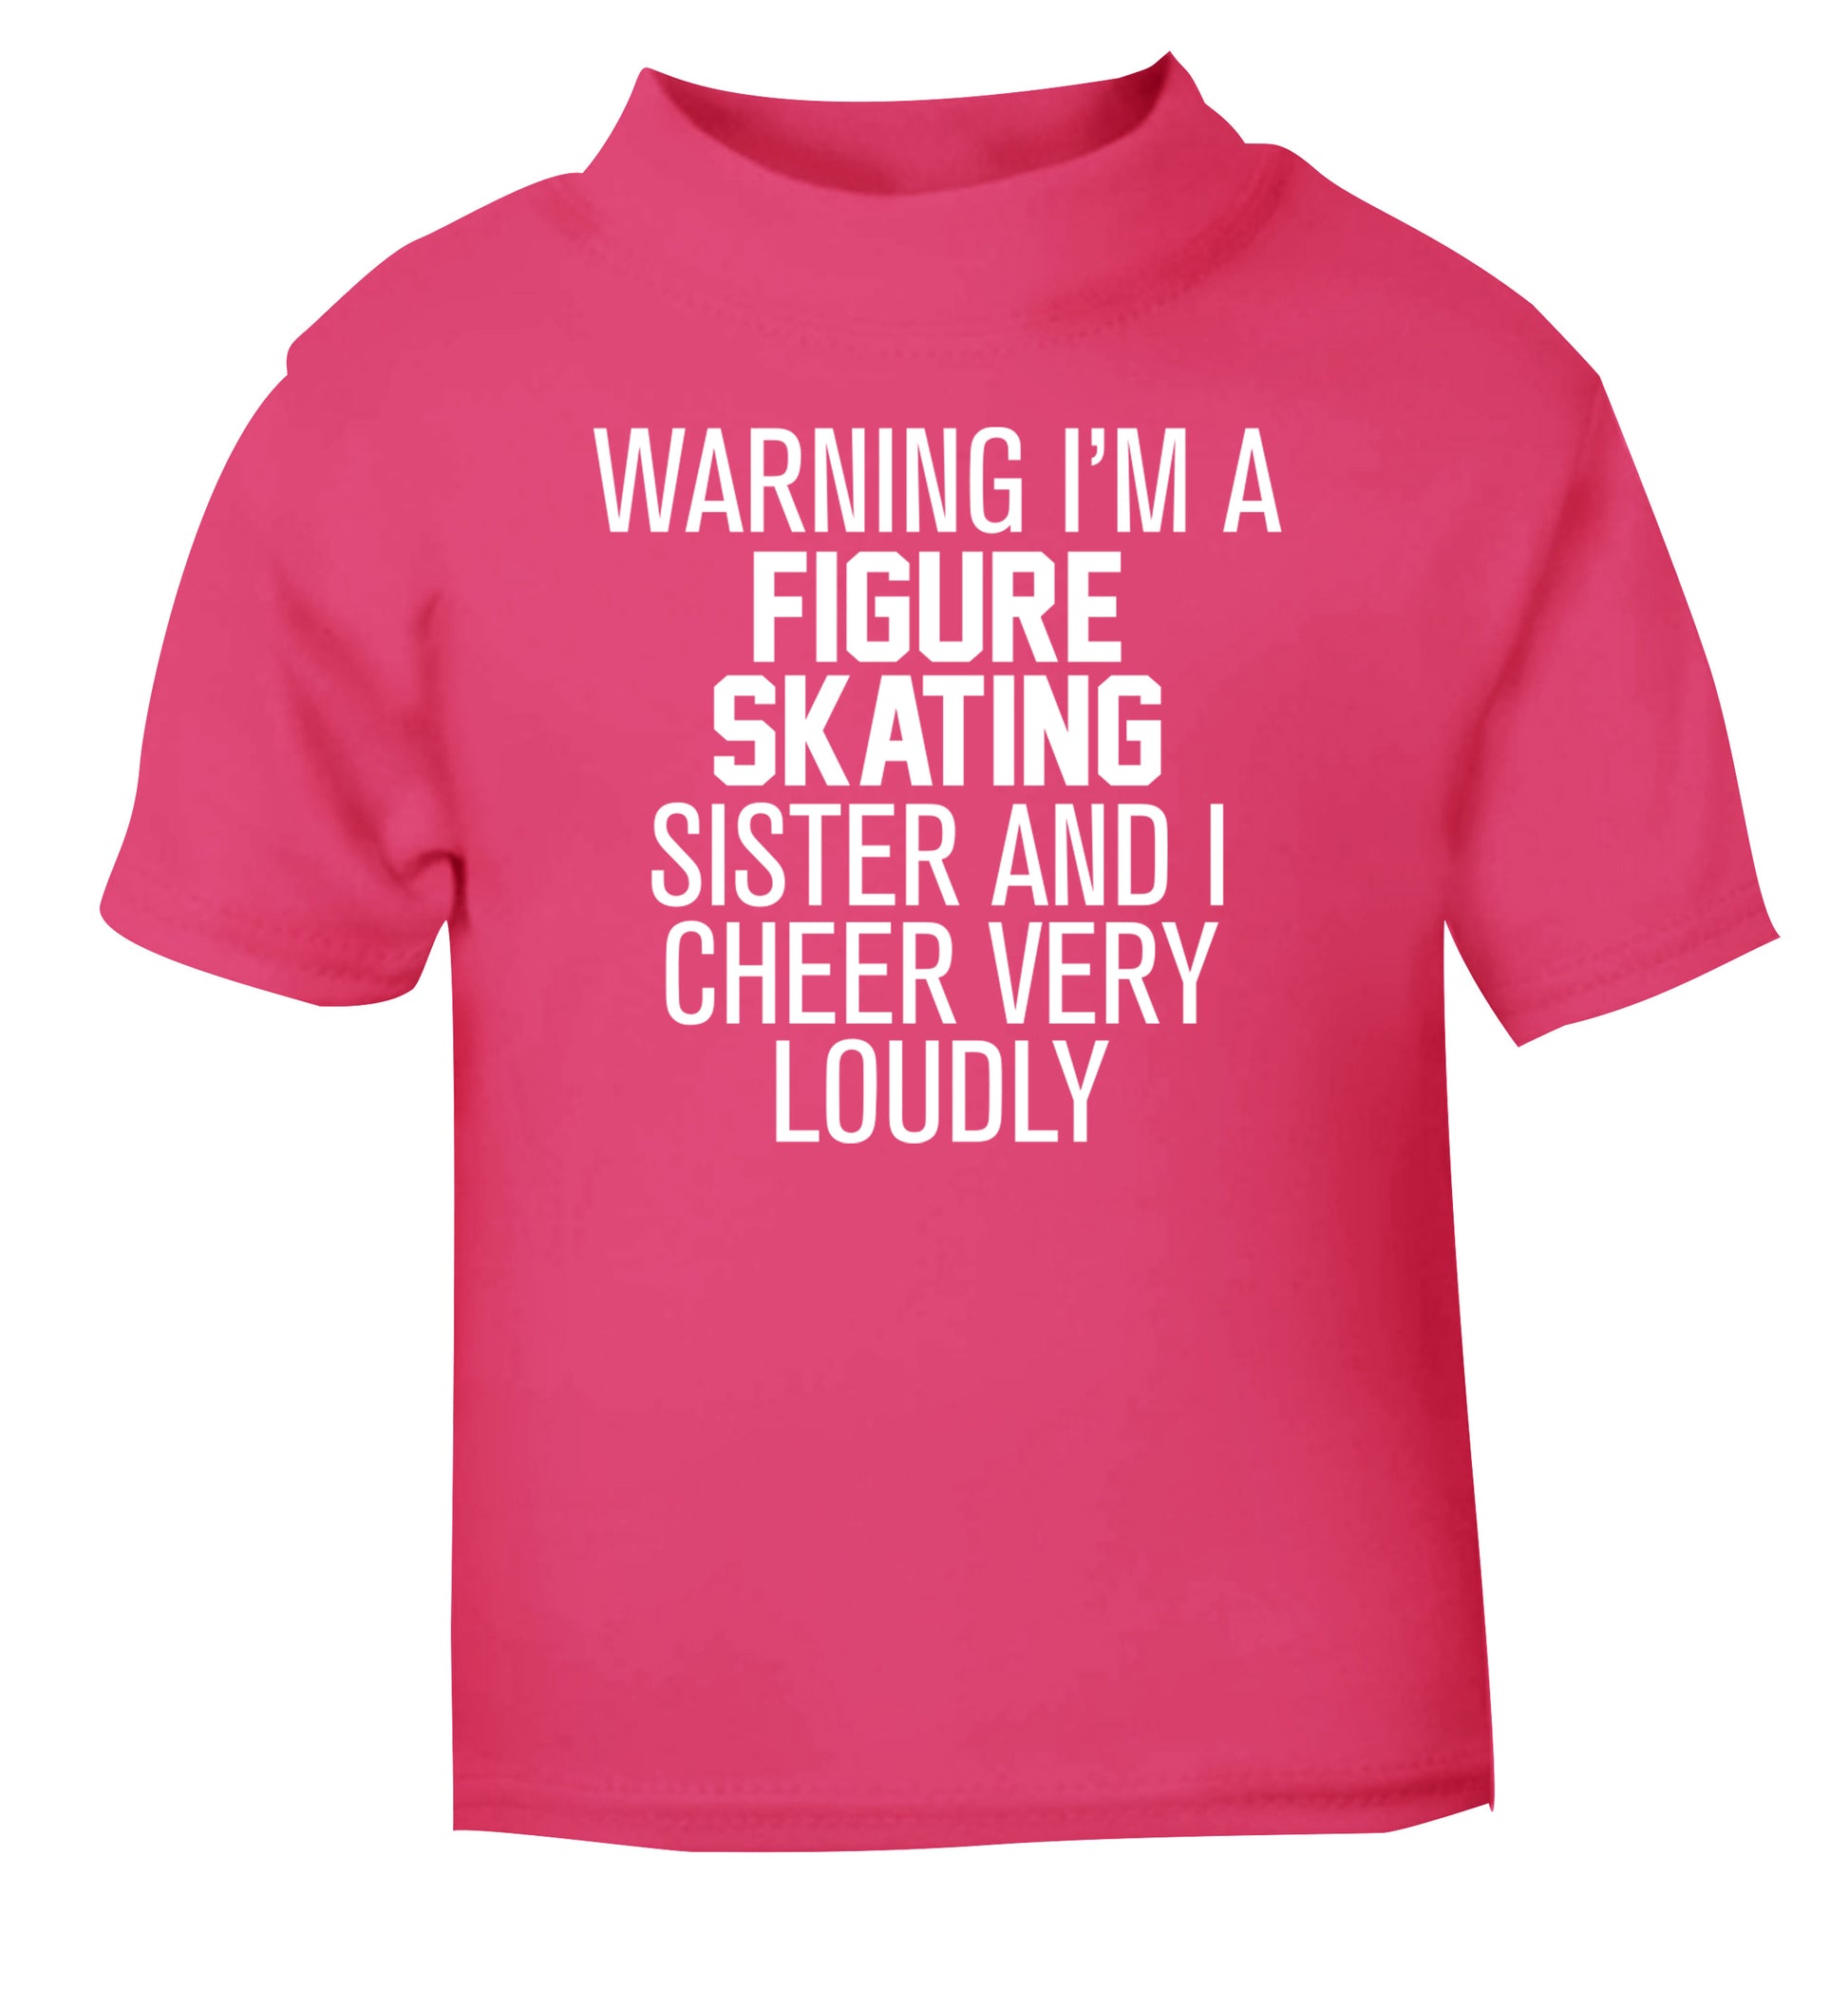 Warning I'm a figure skating sister and I cheer very loudly pink Baby Toddler Tshirt 2 Years